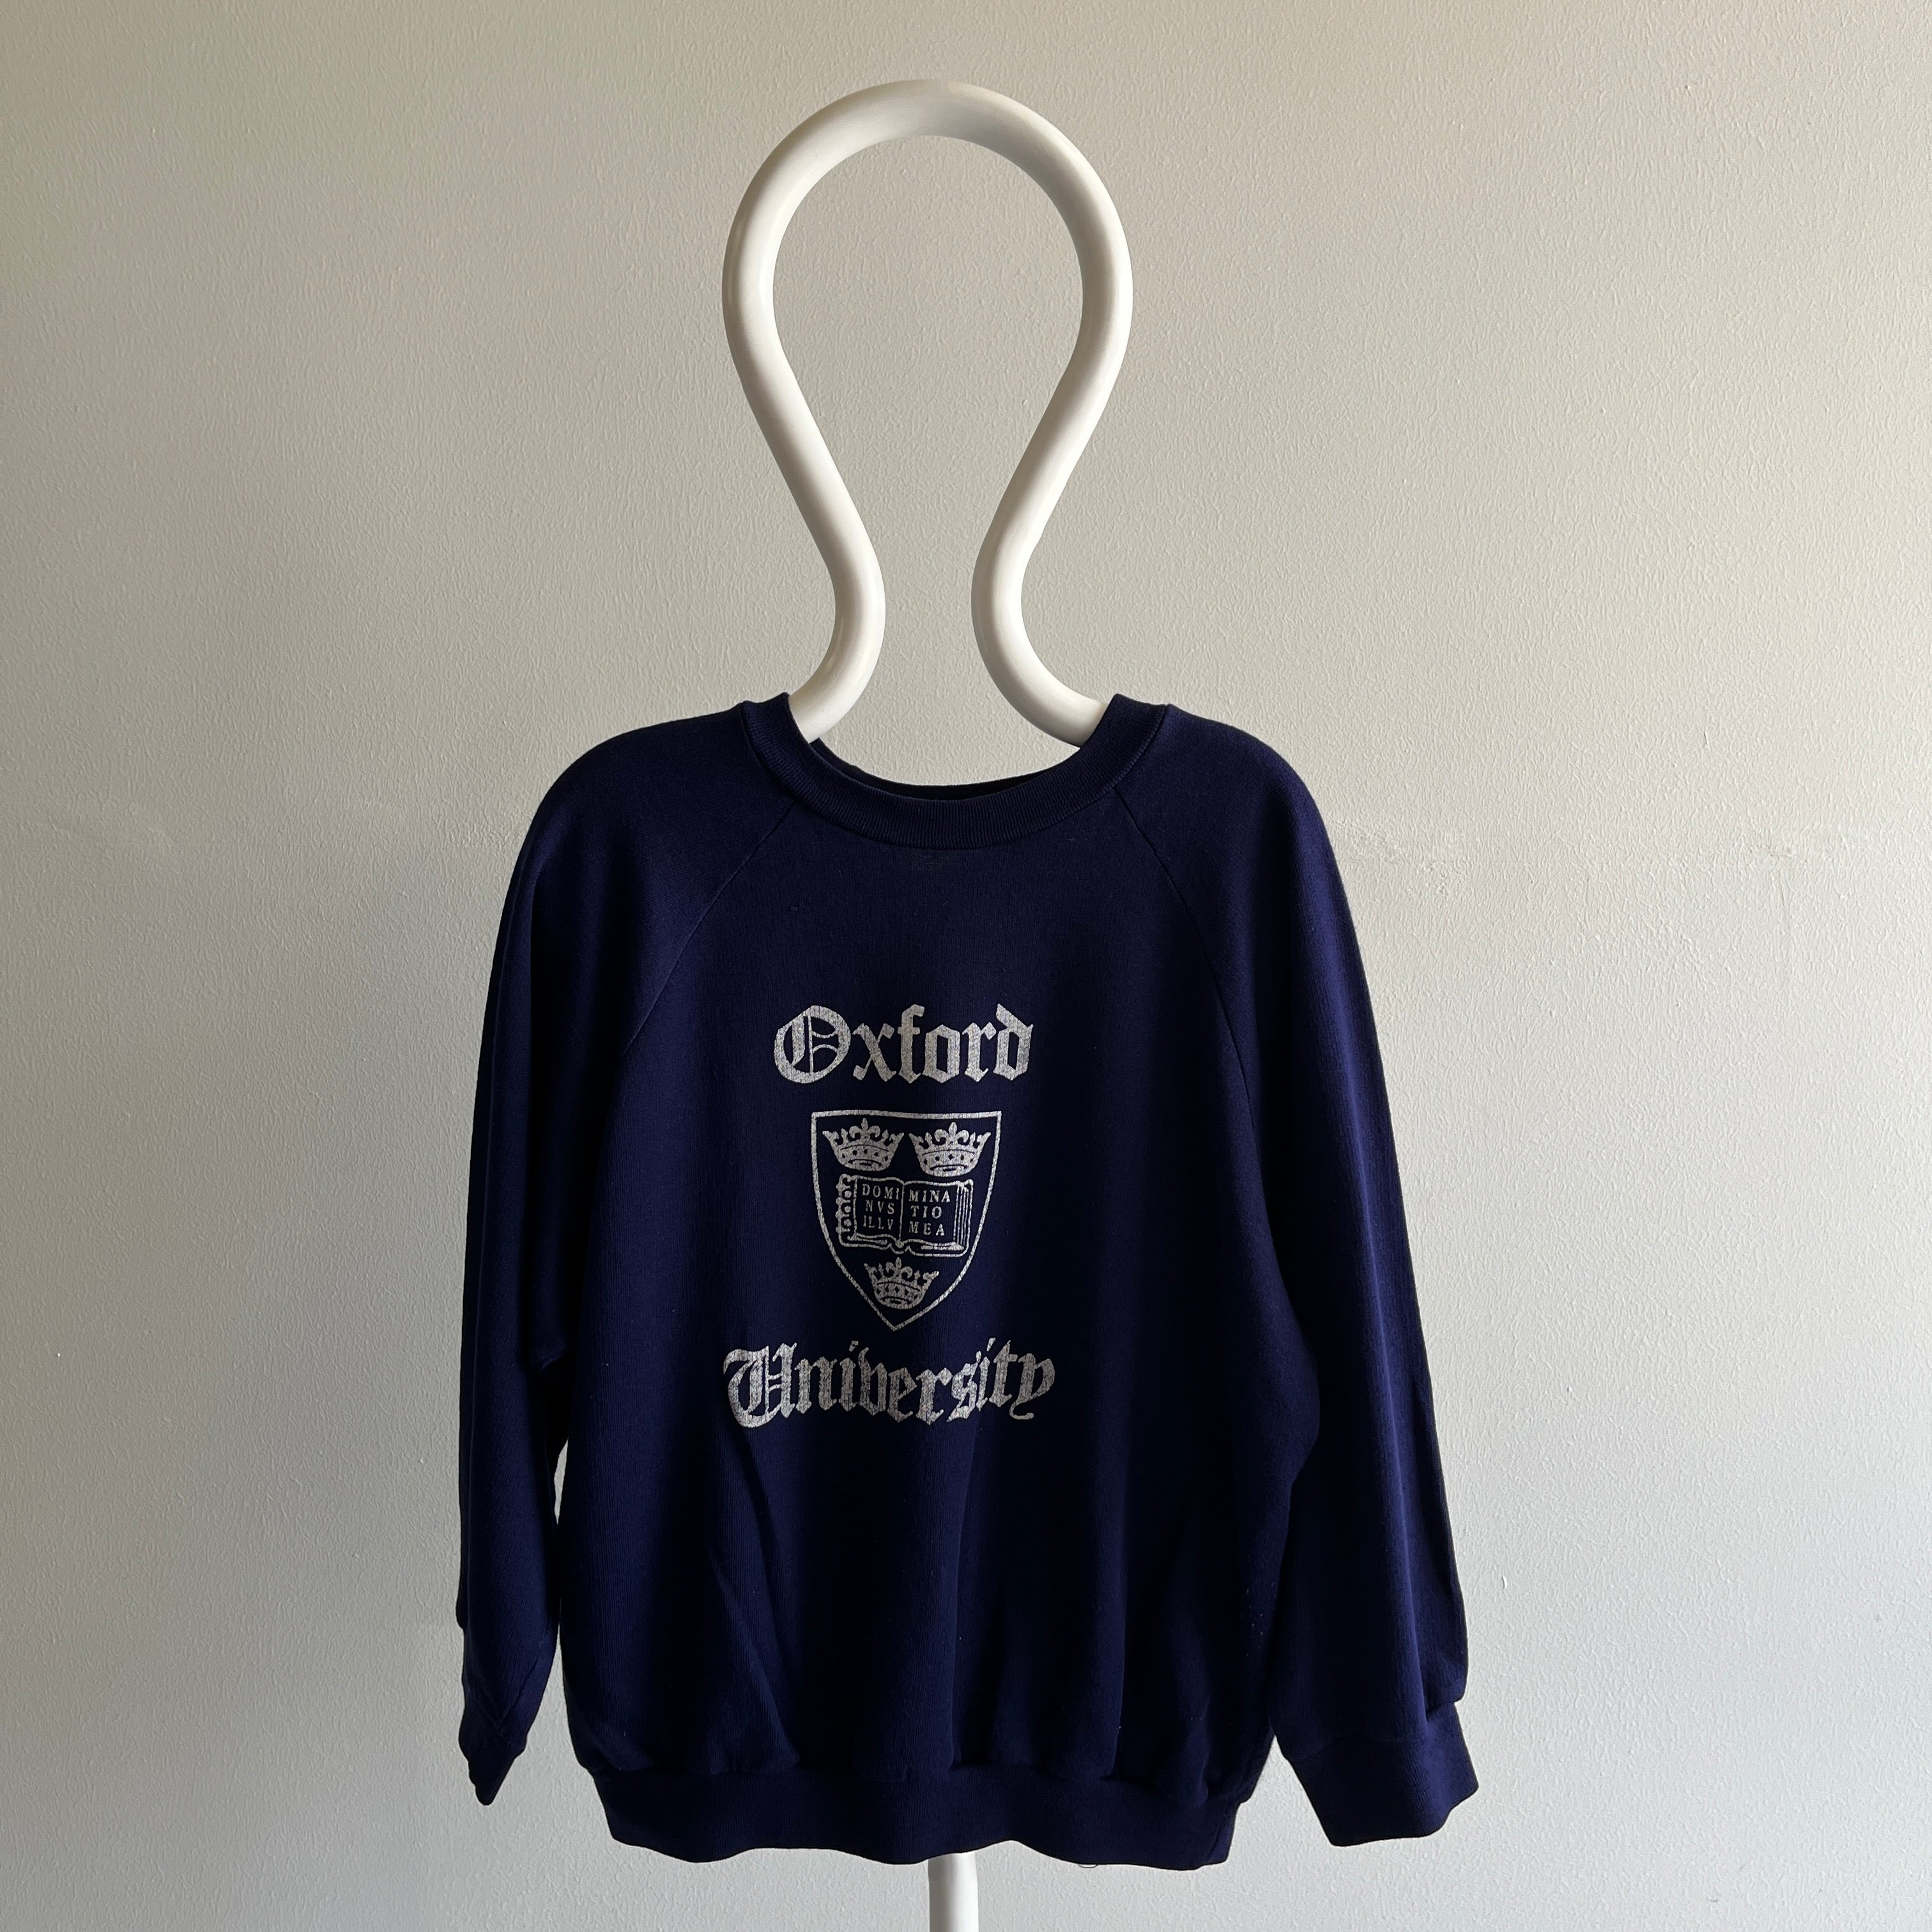 1980s Oxford England Tourist Sweatshirt with Mending on Backside